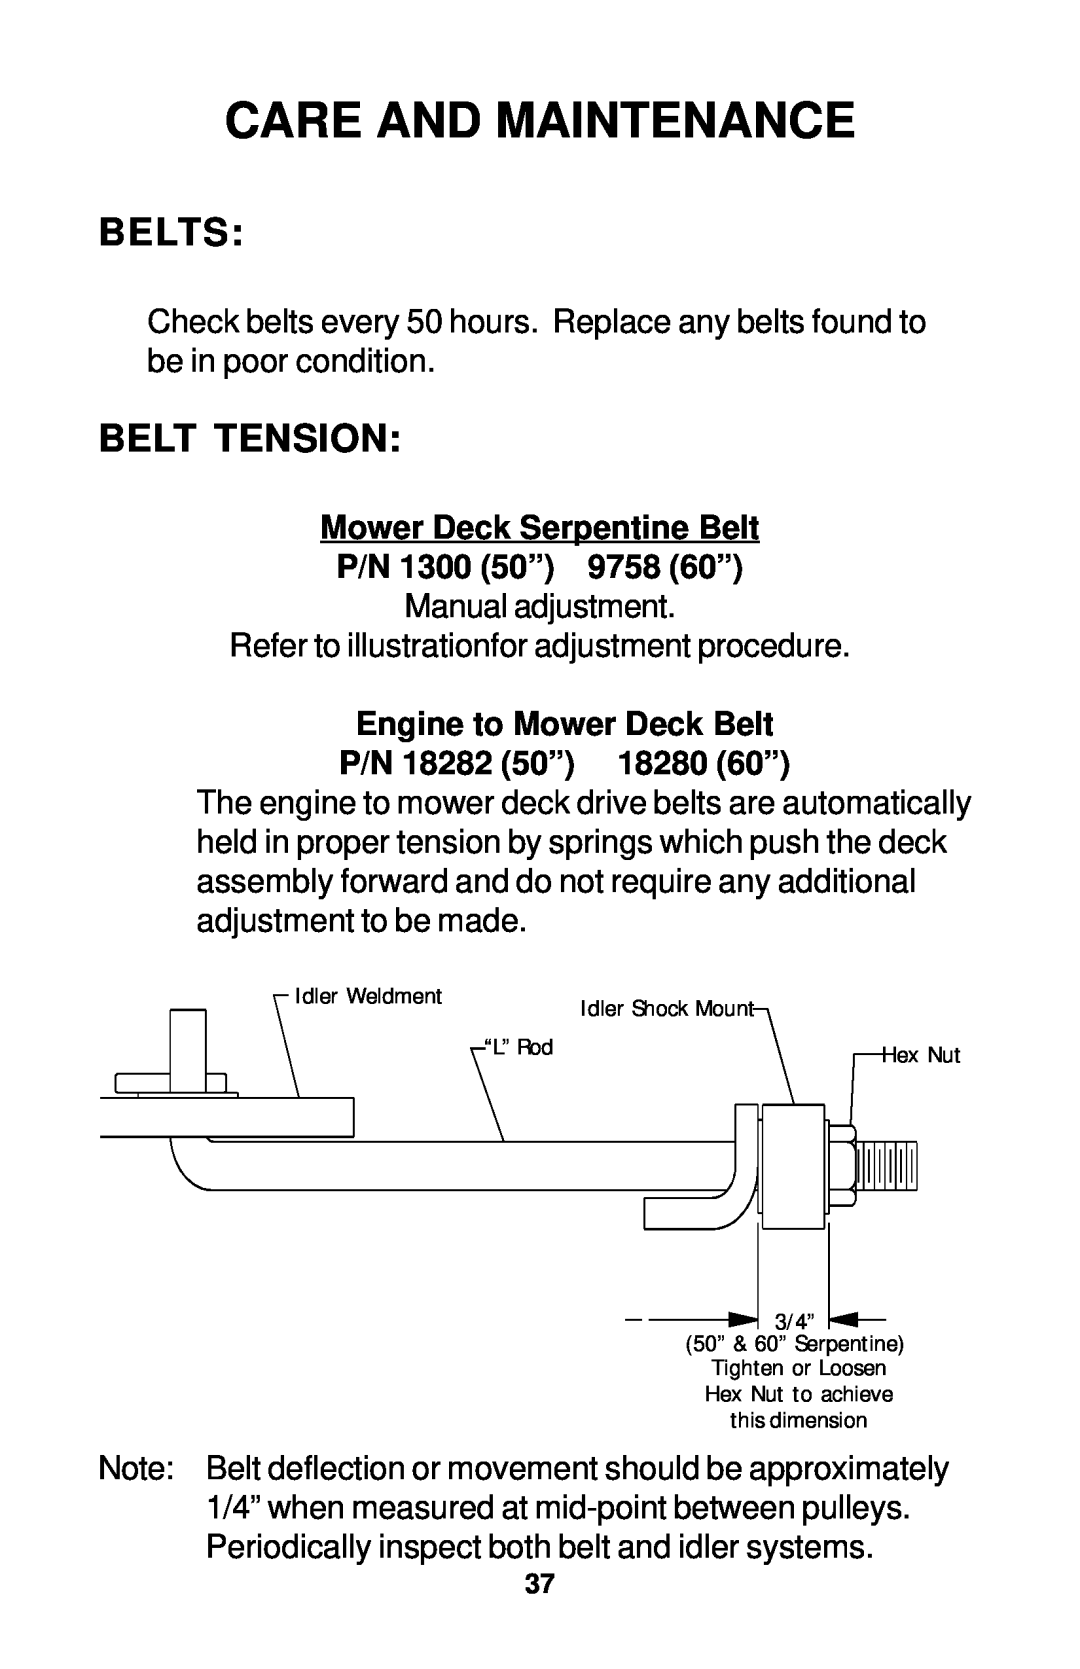 Dixon 18134-1004 manual Belts, Belt Tension, Care And Maintenance, Mower Deck Serpentine Belt P/N 1300 50” 9758 60” 